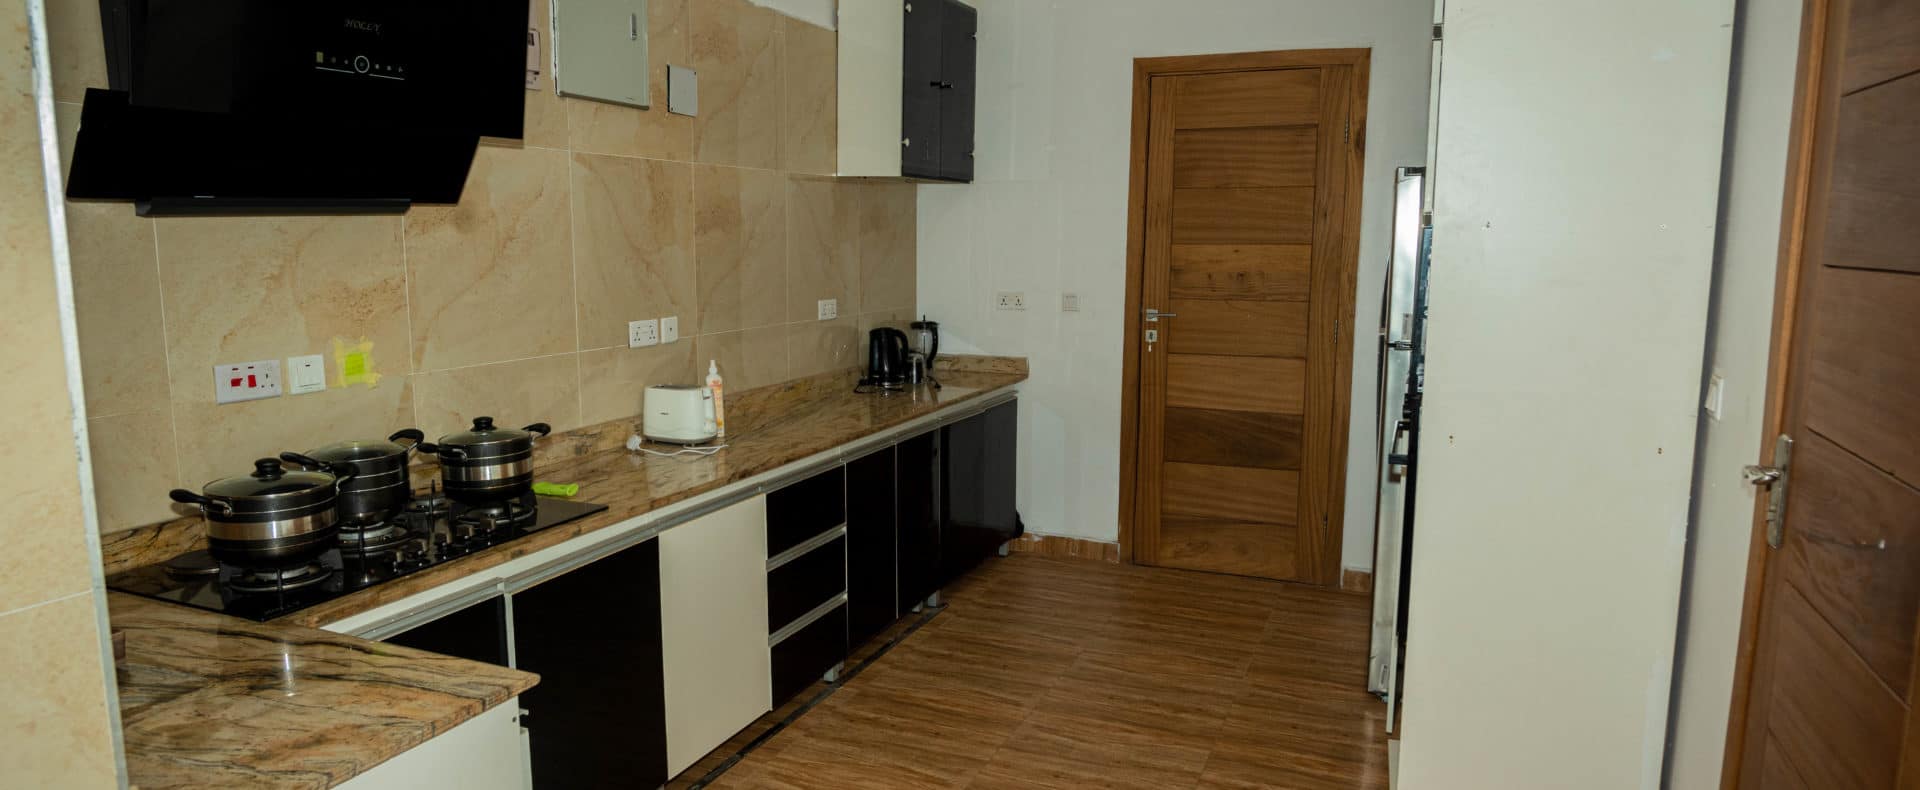 Luxury 2 Bedroom Newocean Short Let Apartment In Lagos Nigeria